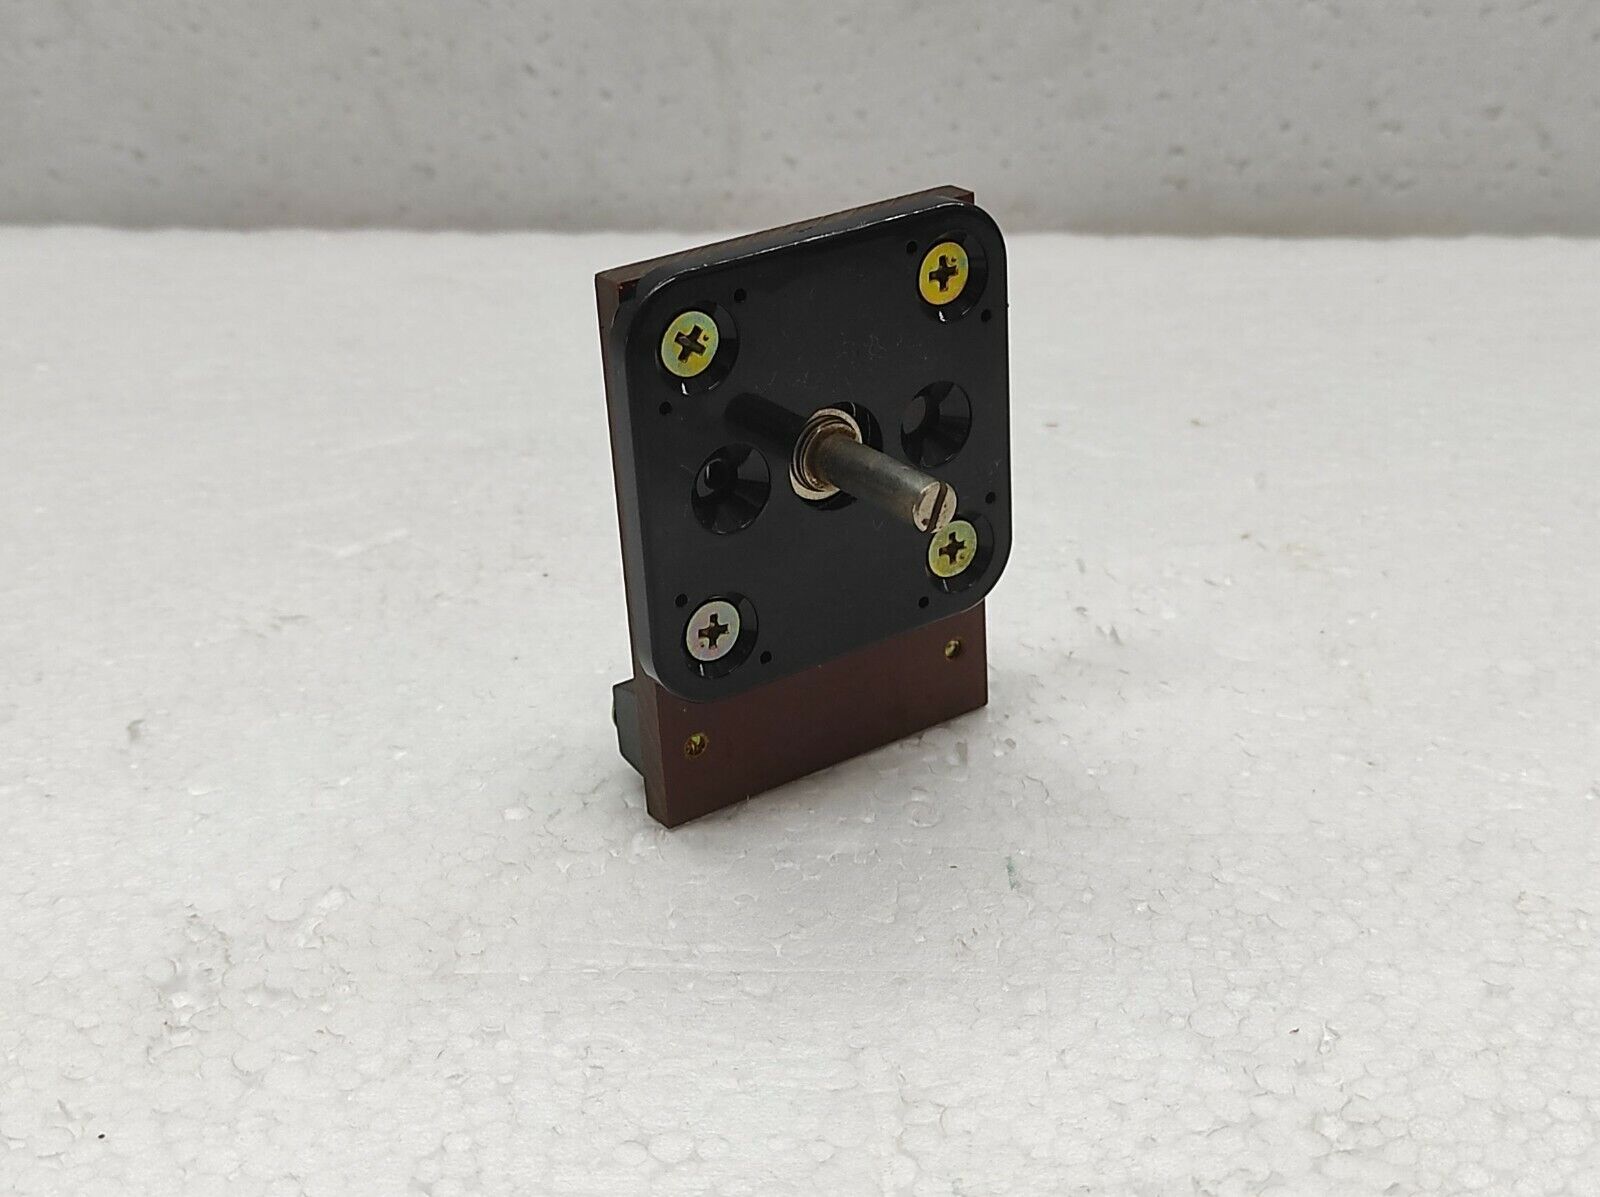 Cosmos NRV1-100 Resistor Potentiometer